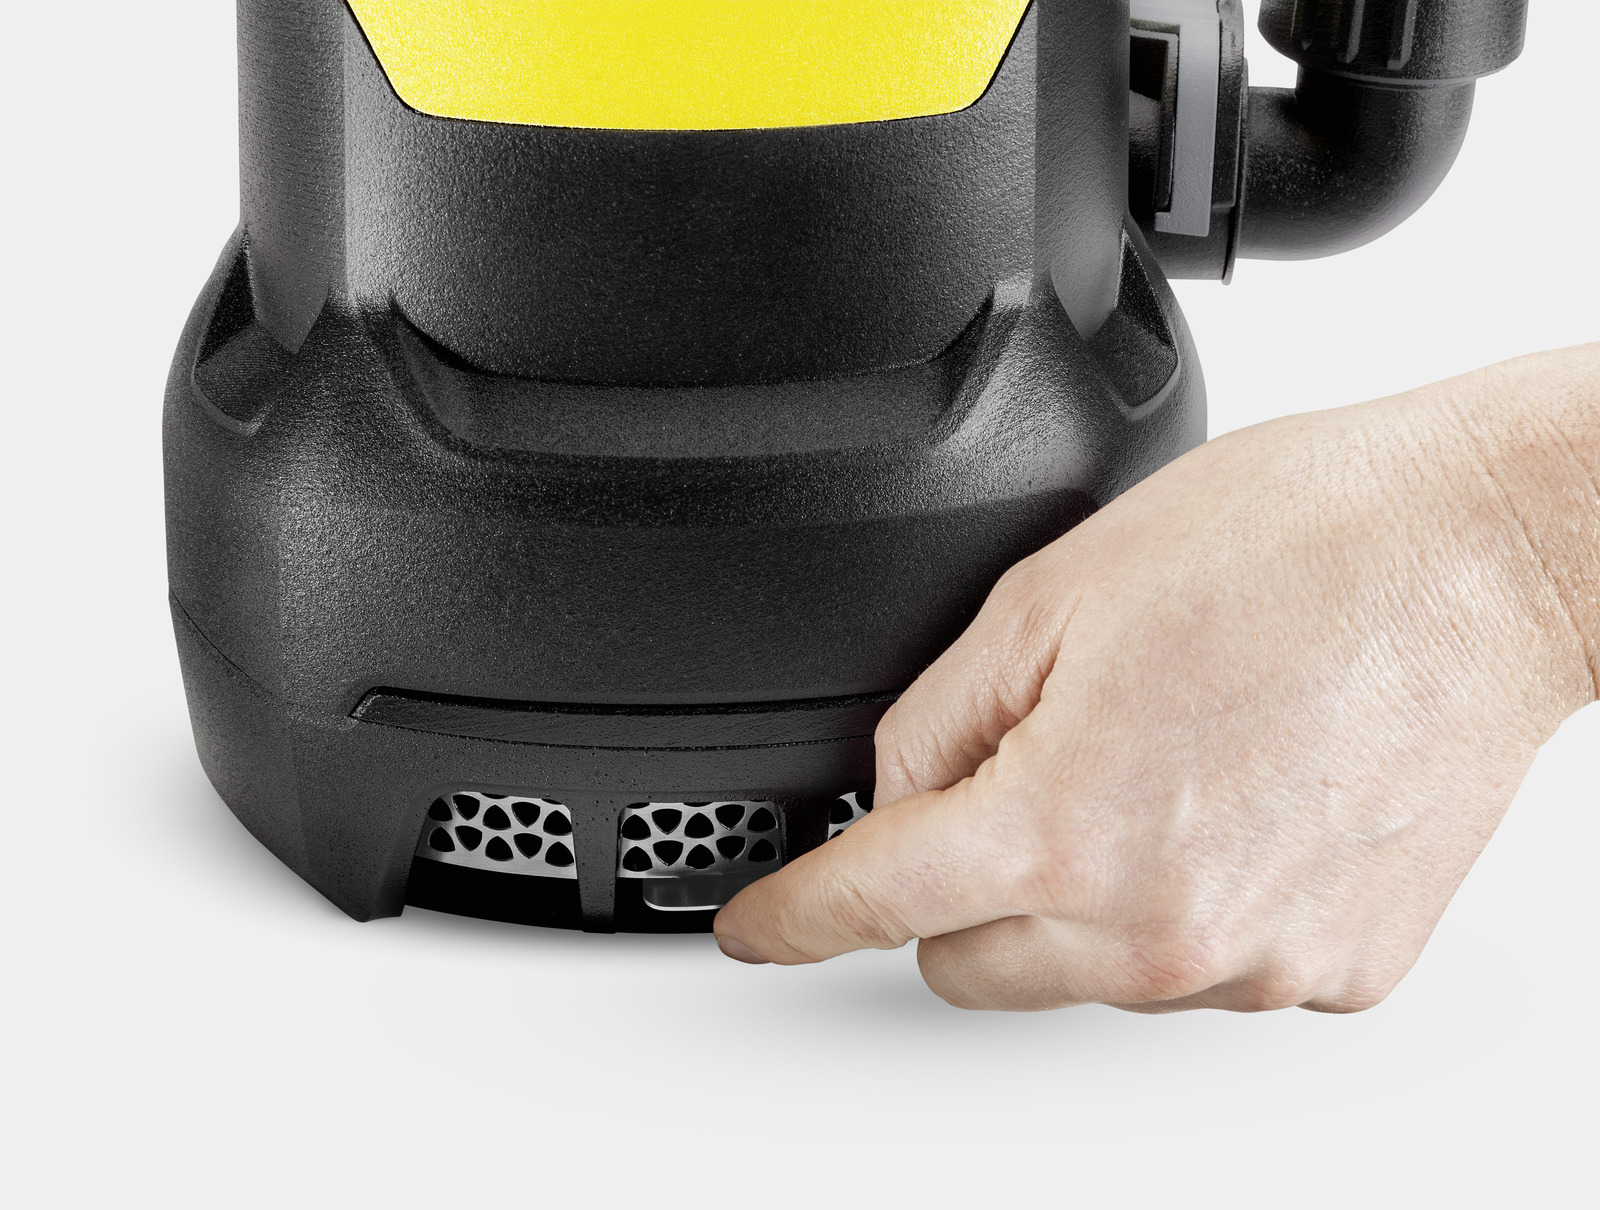 Karcher K5 Premium Full Control Plus Home Pressure Washer